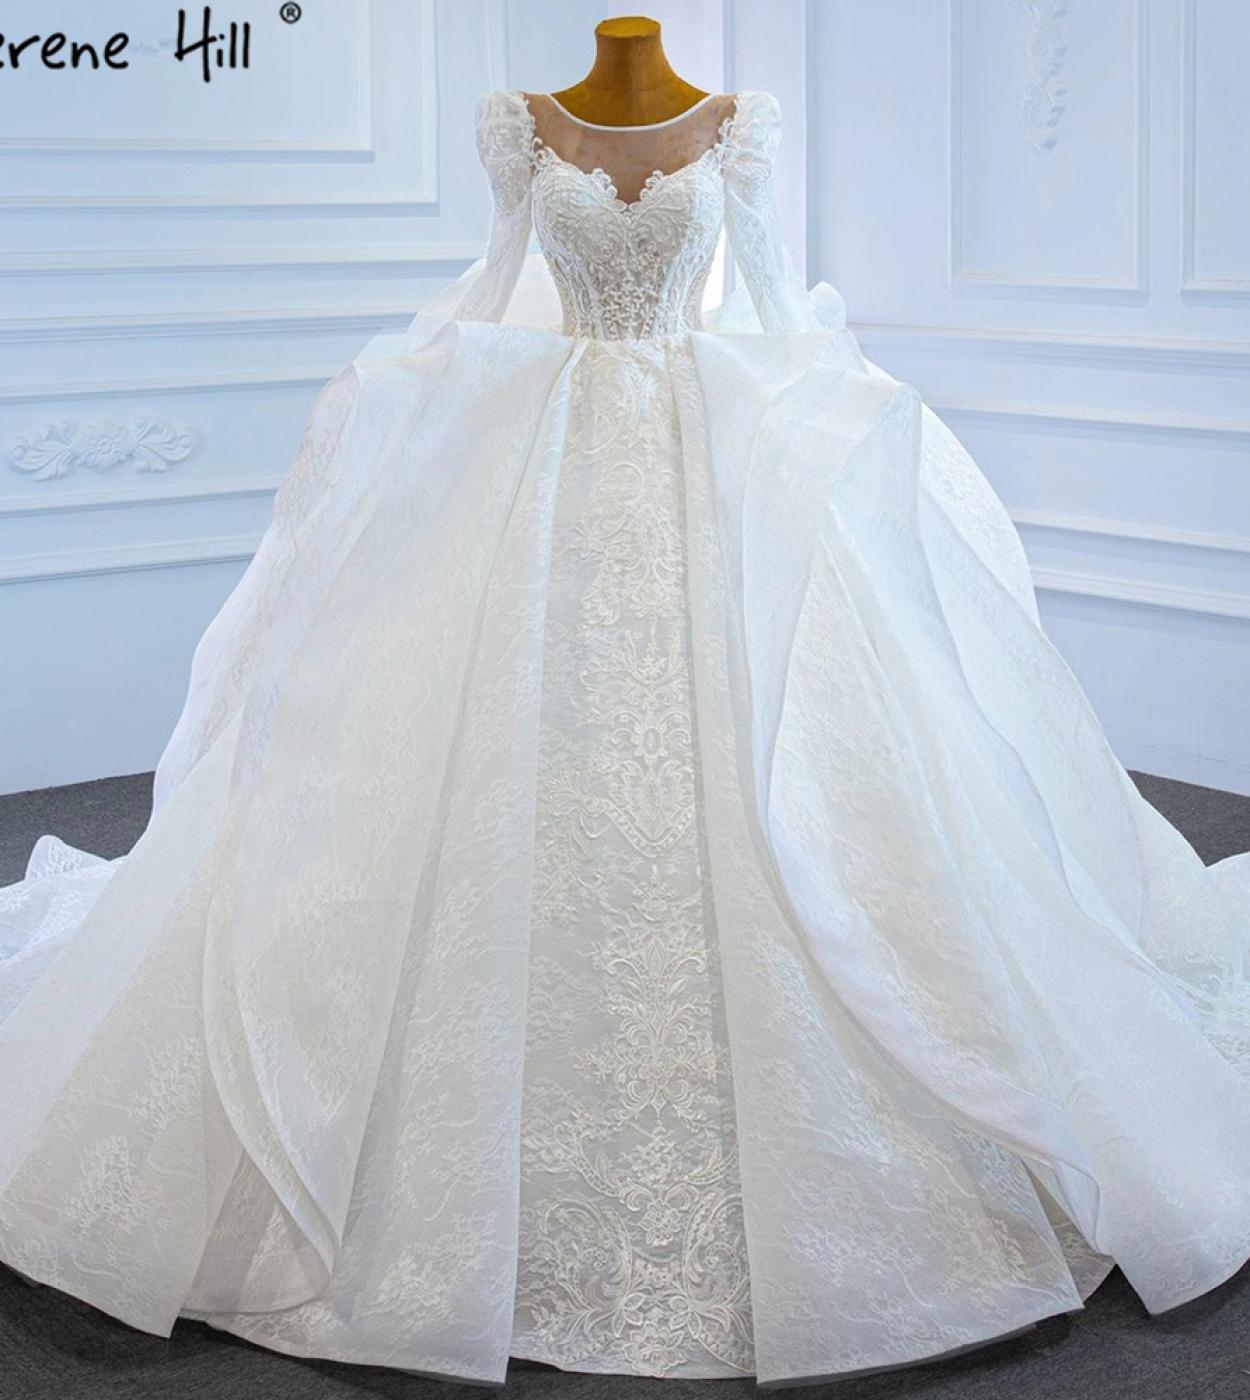 Wedding Dresses Bridal Serene Hill  Serene Hill Dress Luxury Beads  White Luxury  